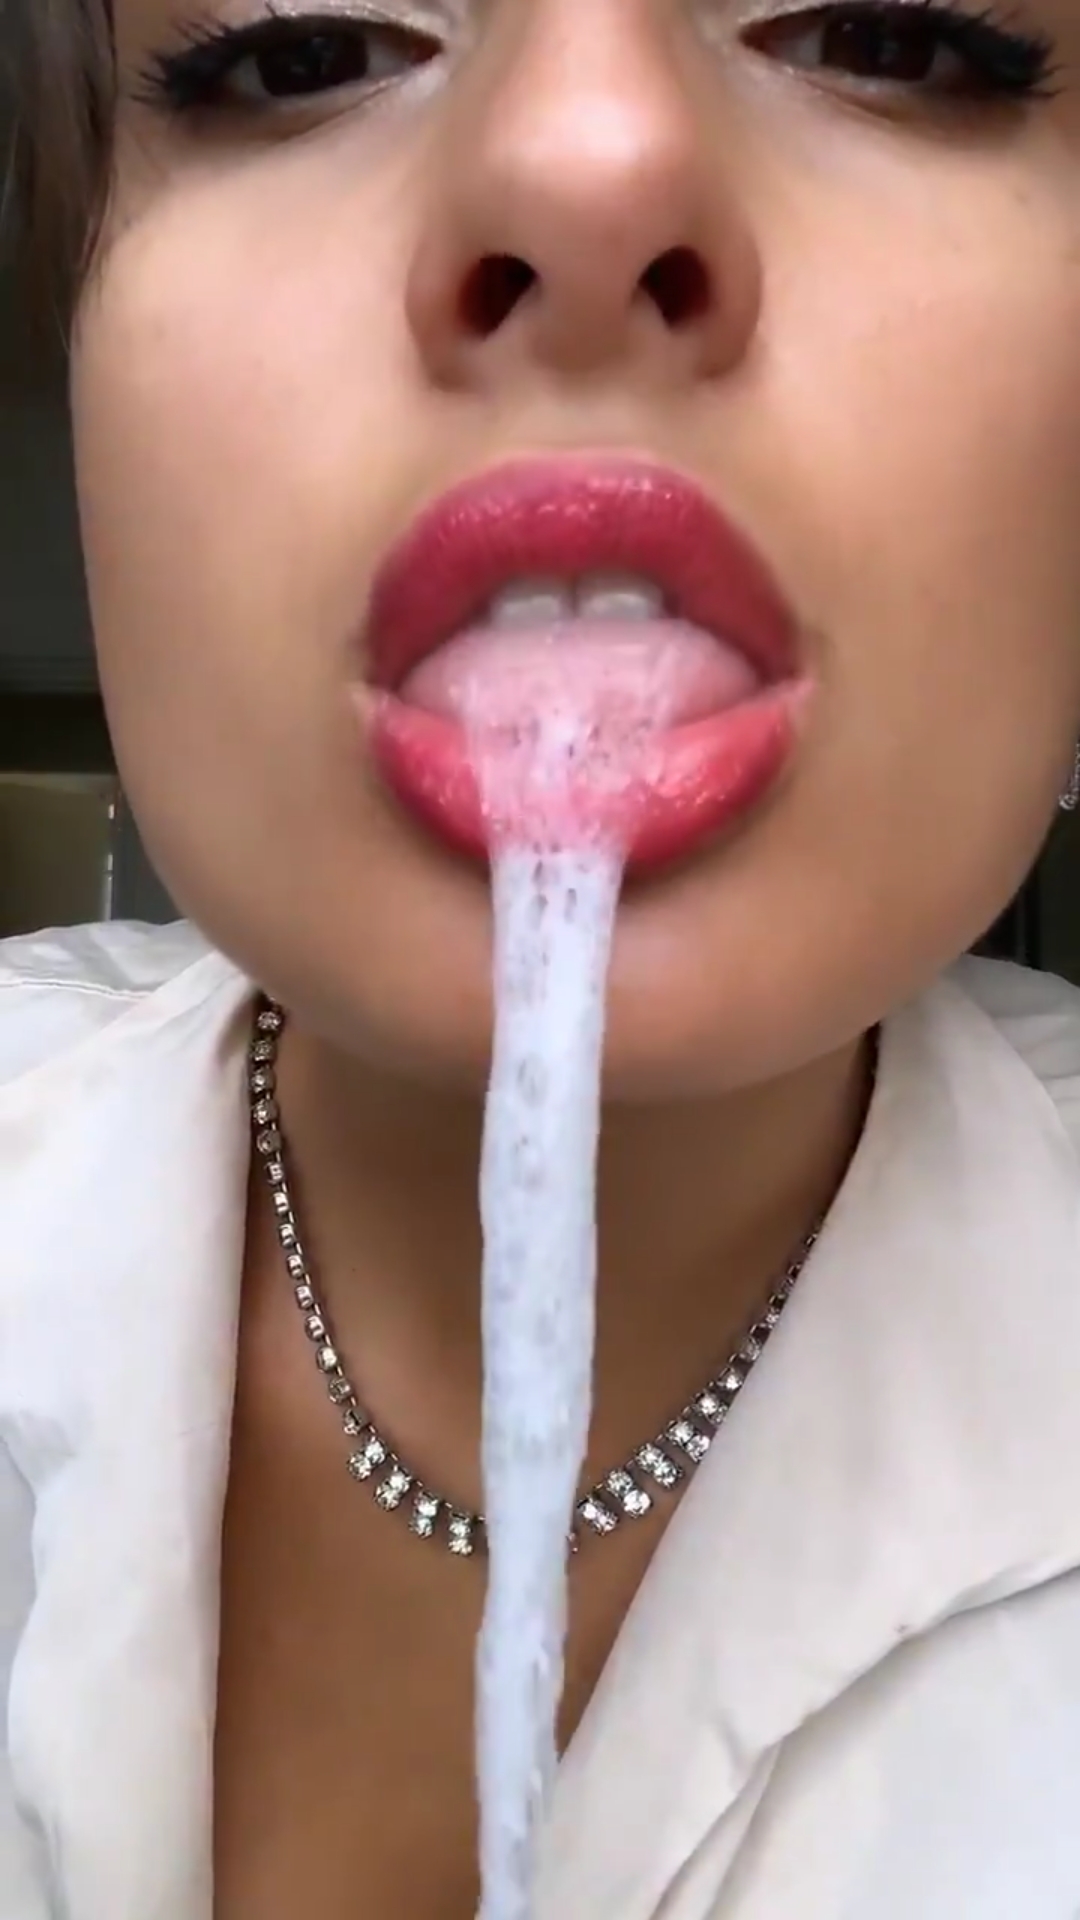 Sexy girl spitting loogies